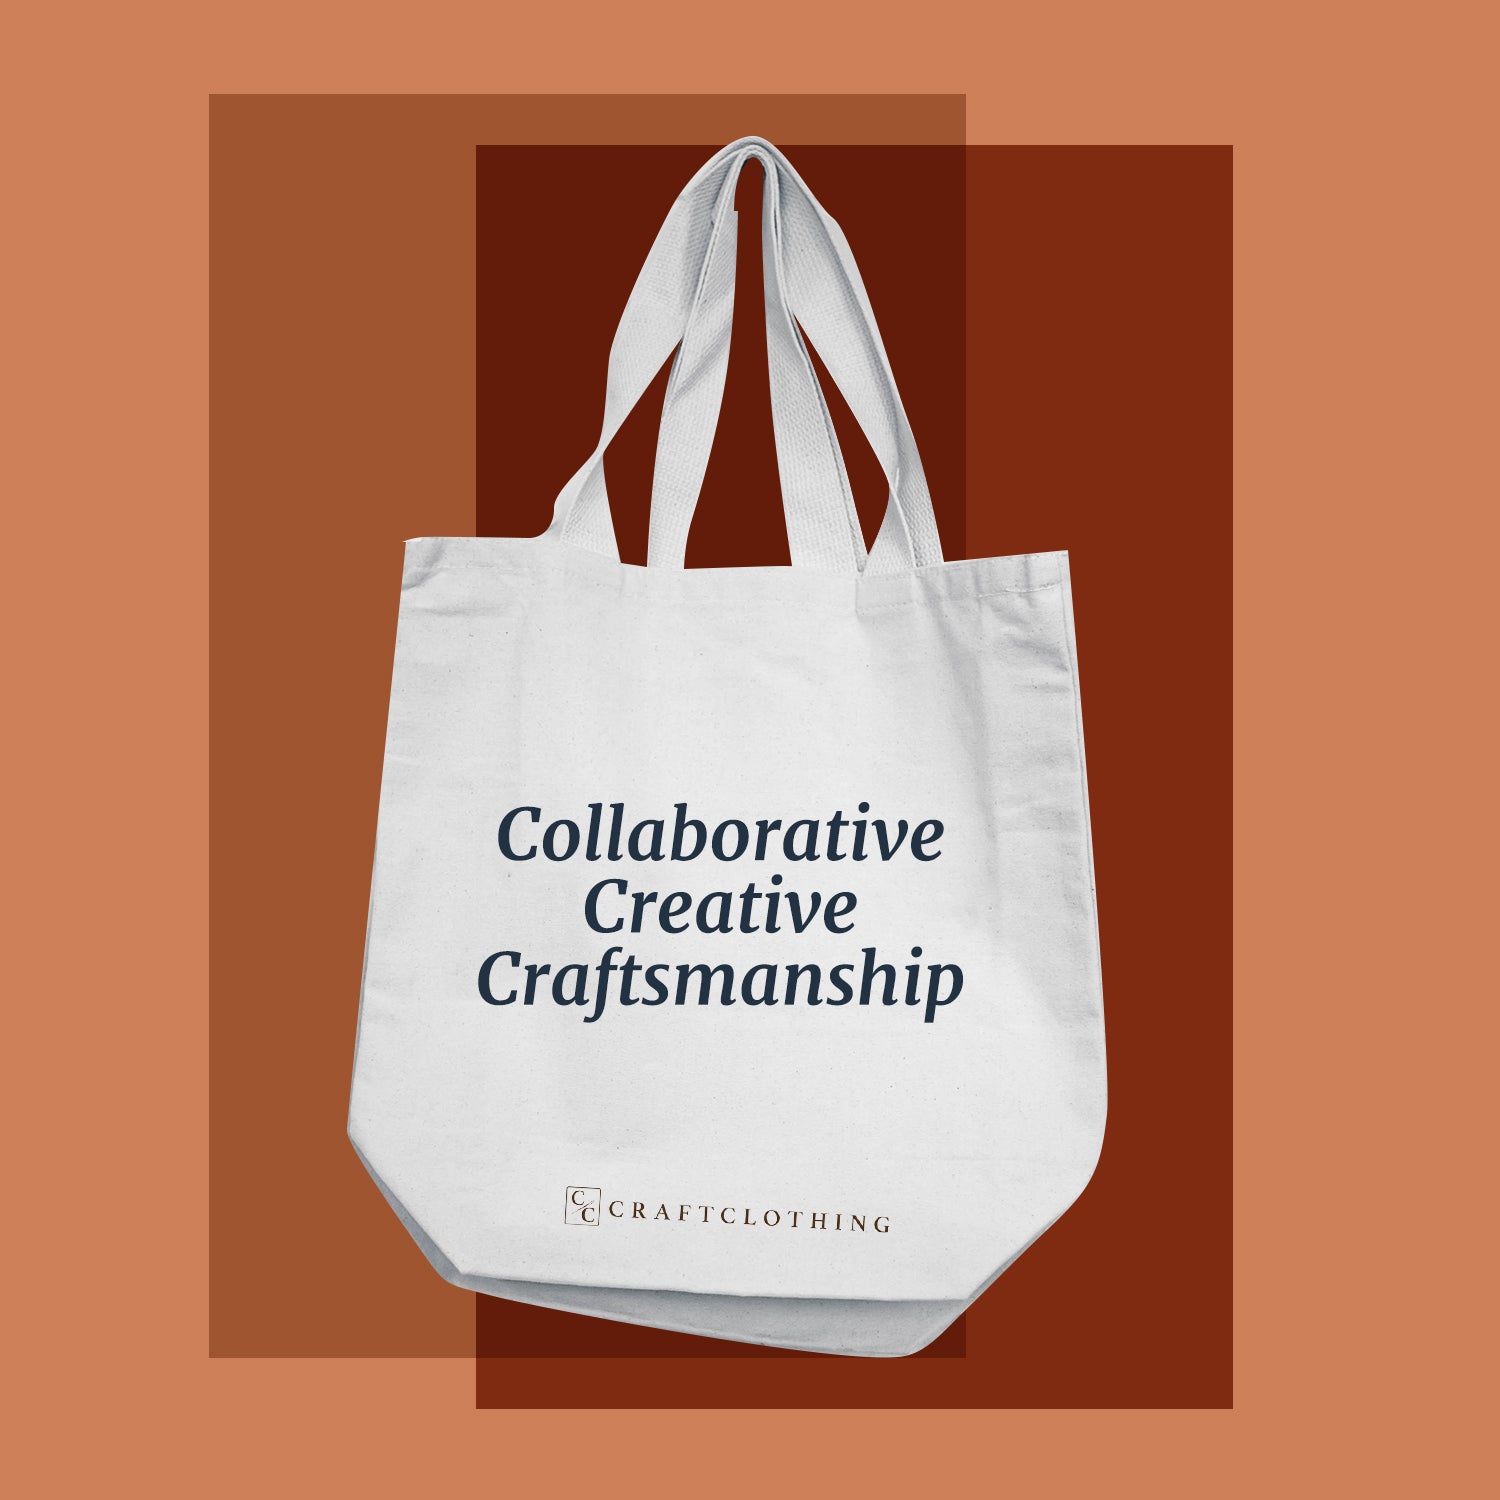 Collaborative Creative Craftsmanship